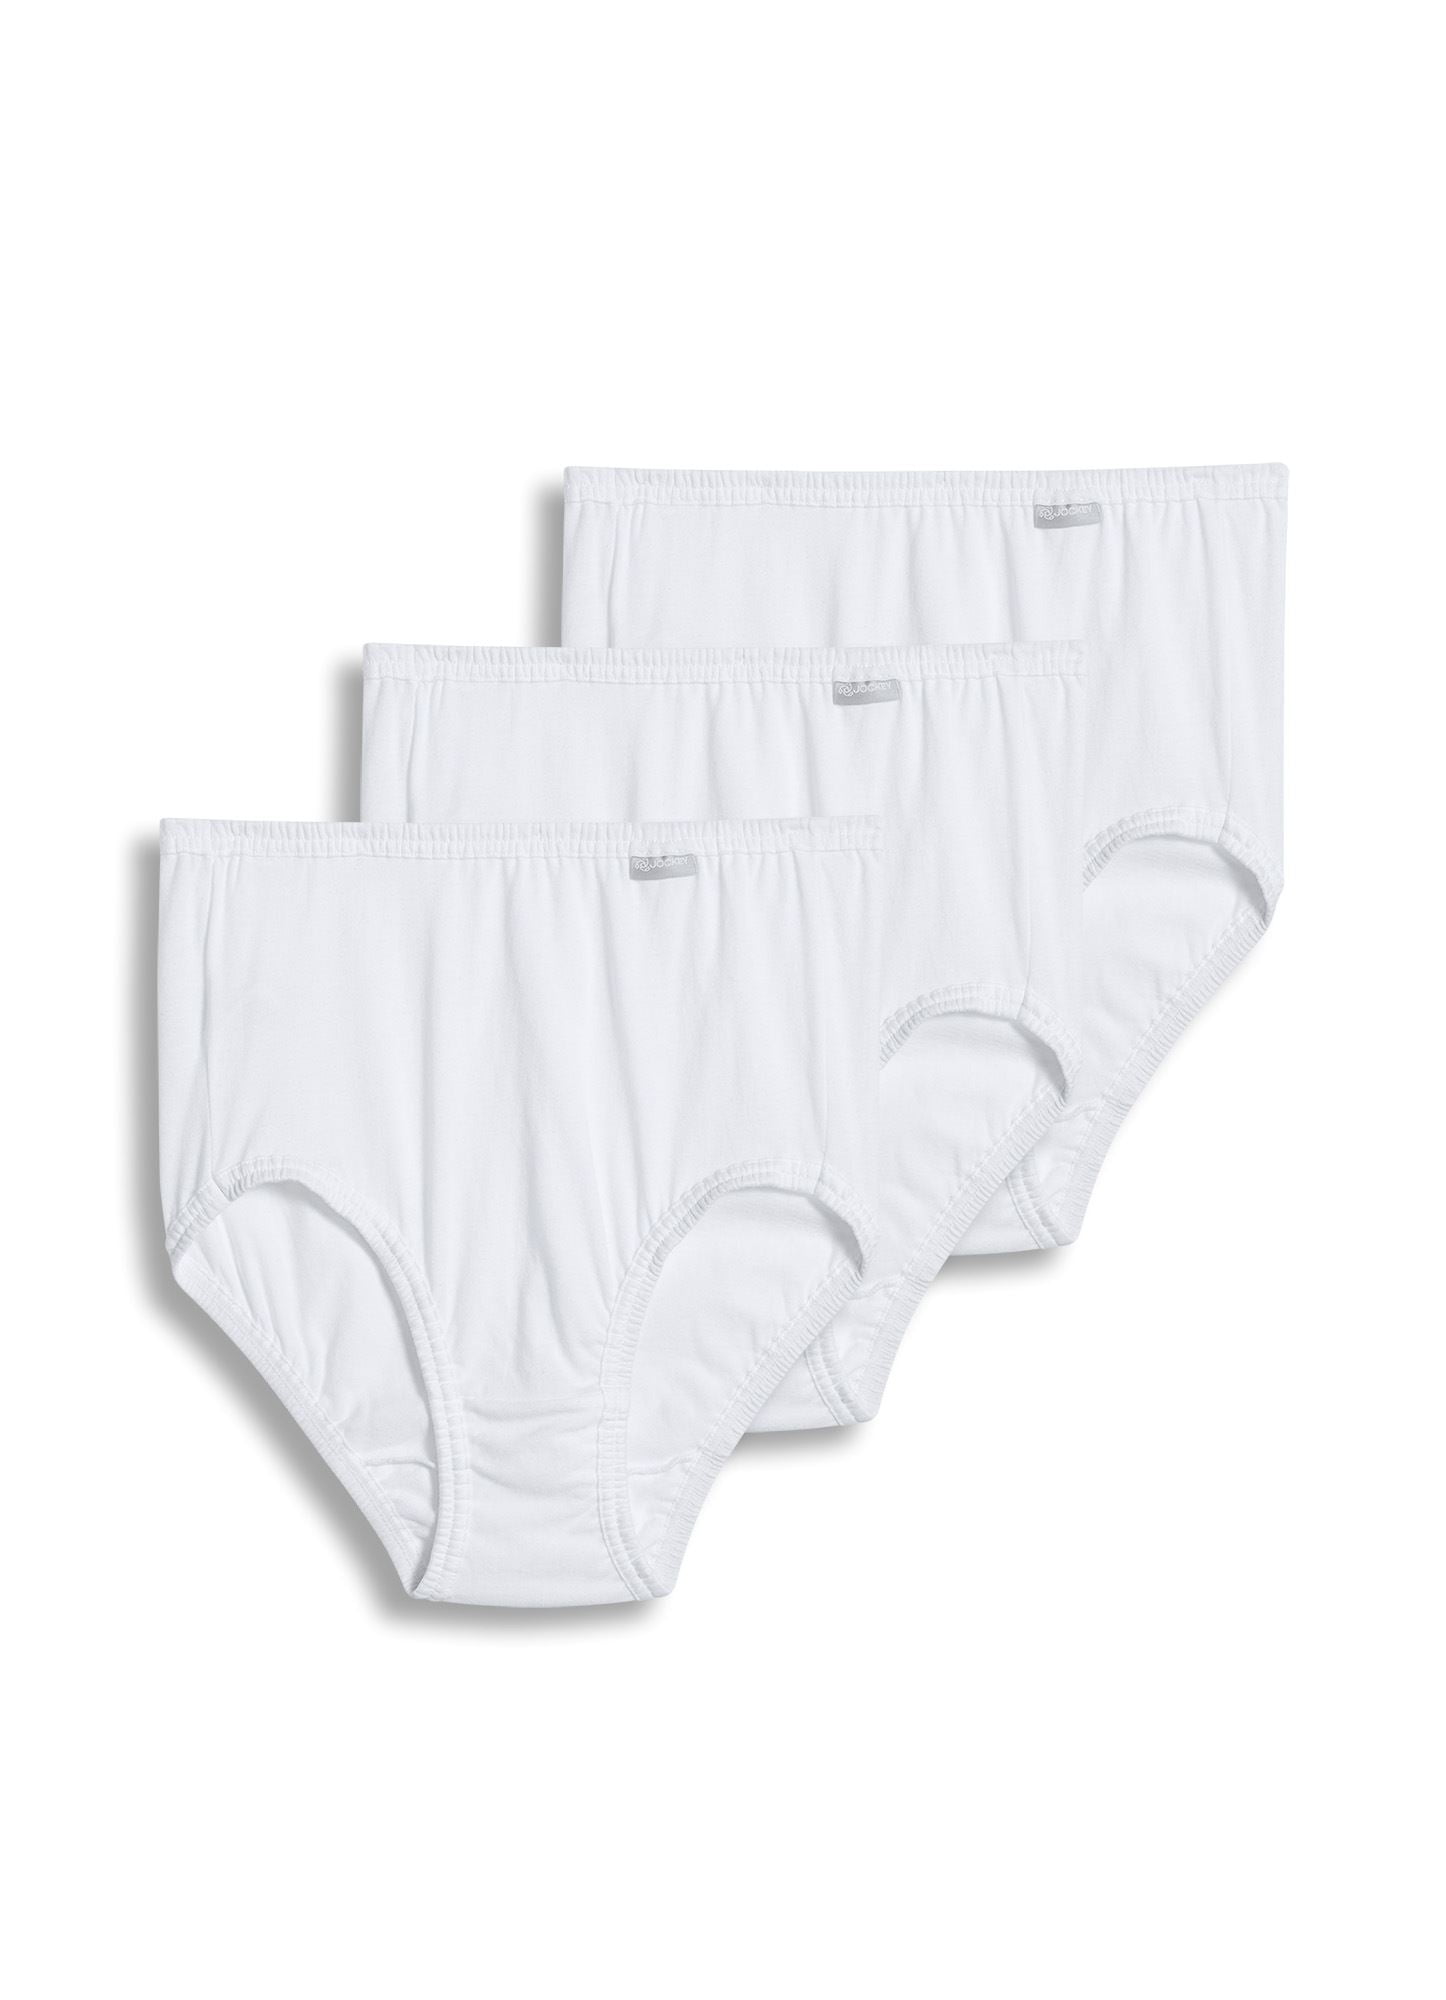 Jockey Women's Underwear Plus Size Classic French Cut - 3